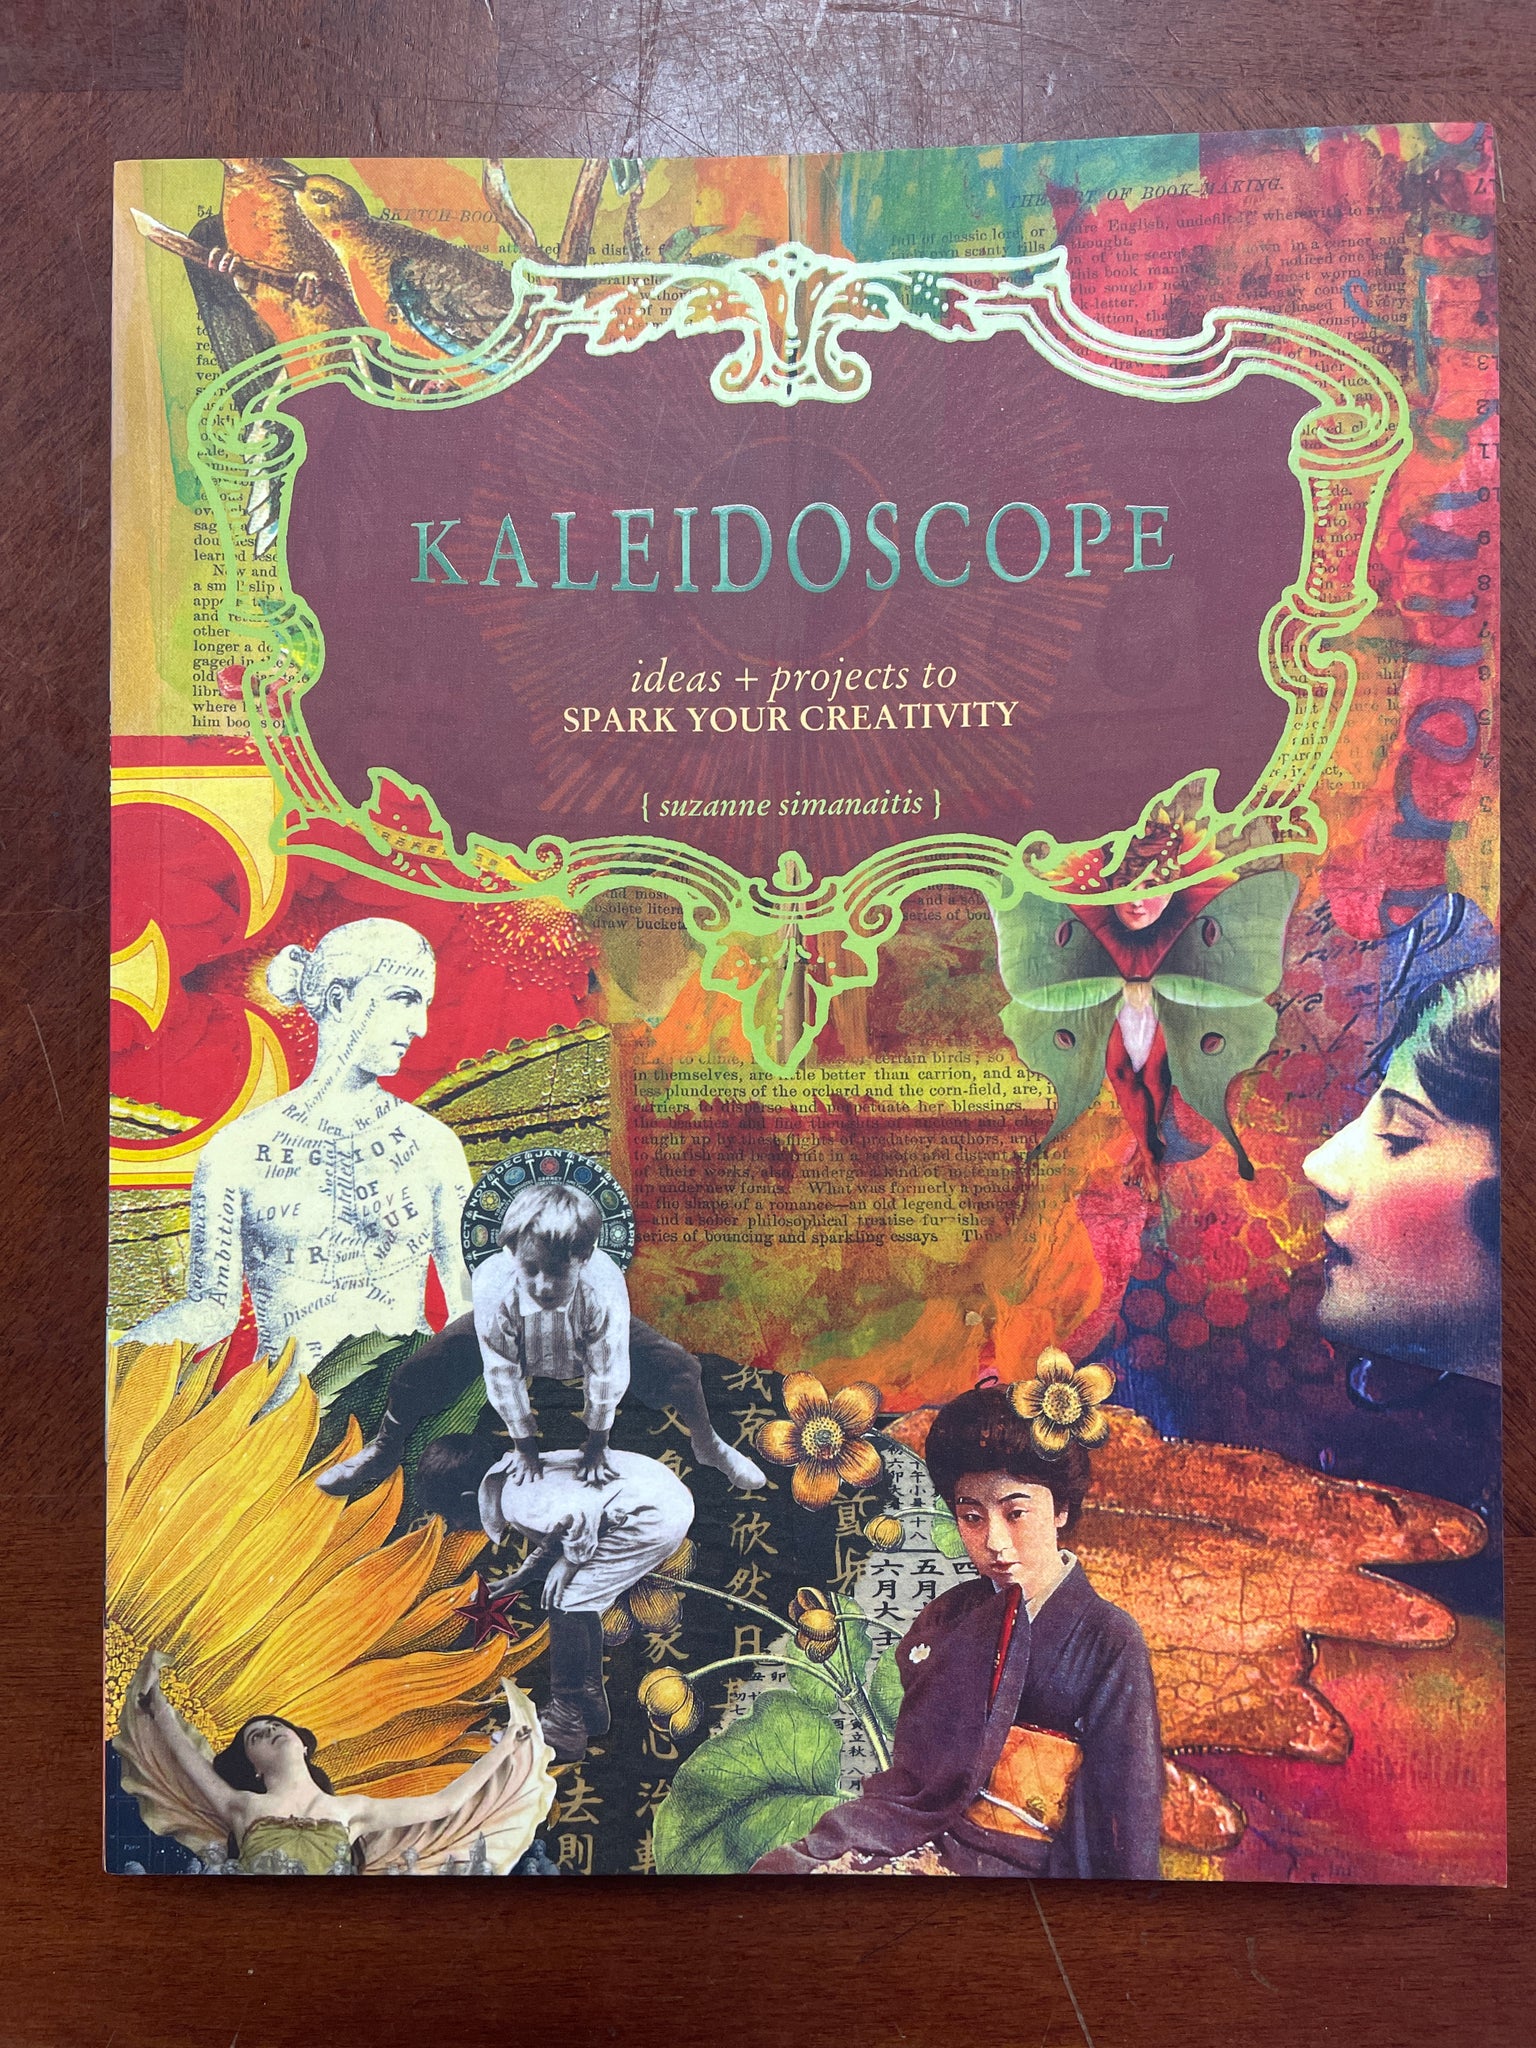 2007 Mixed-Media Art Book - "Kaleidoscope"